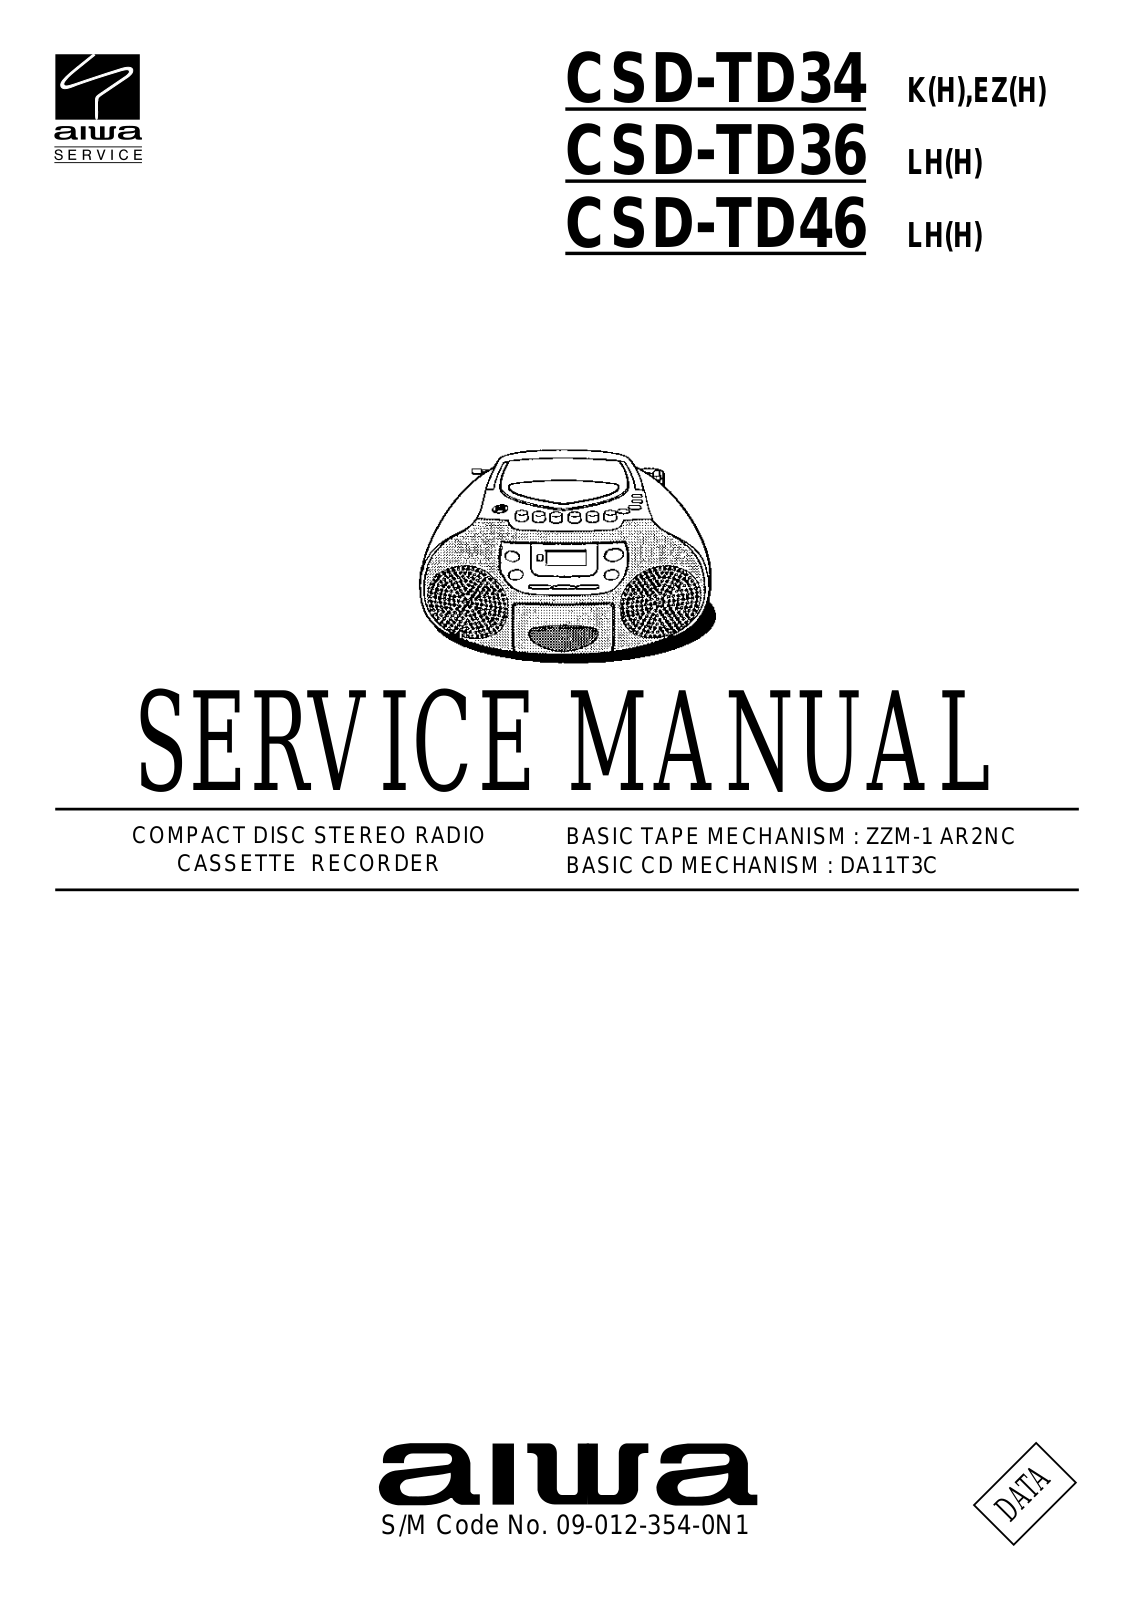 Aiwa CSDTD-34, CSDTD-36, CSDTD-46 Service manual